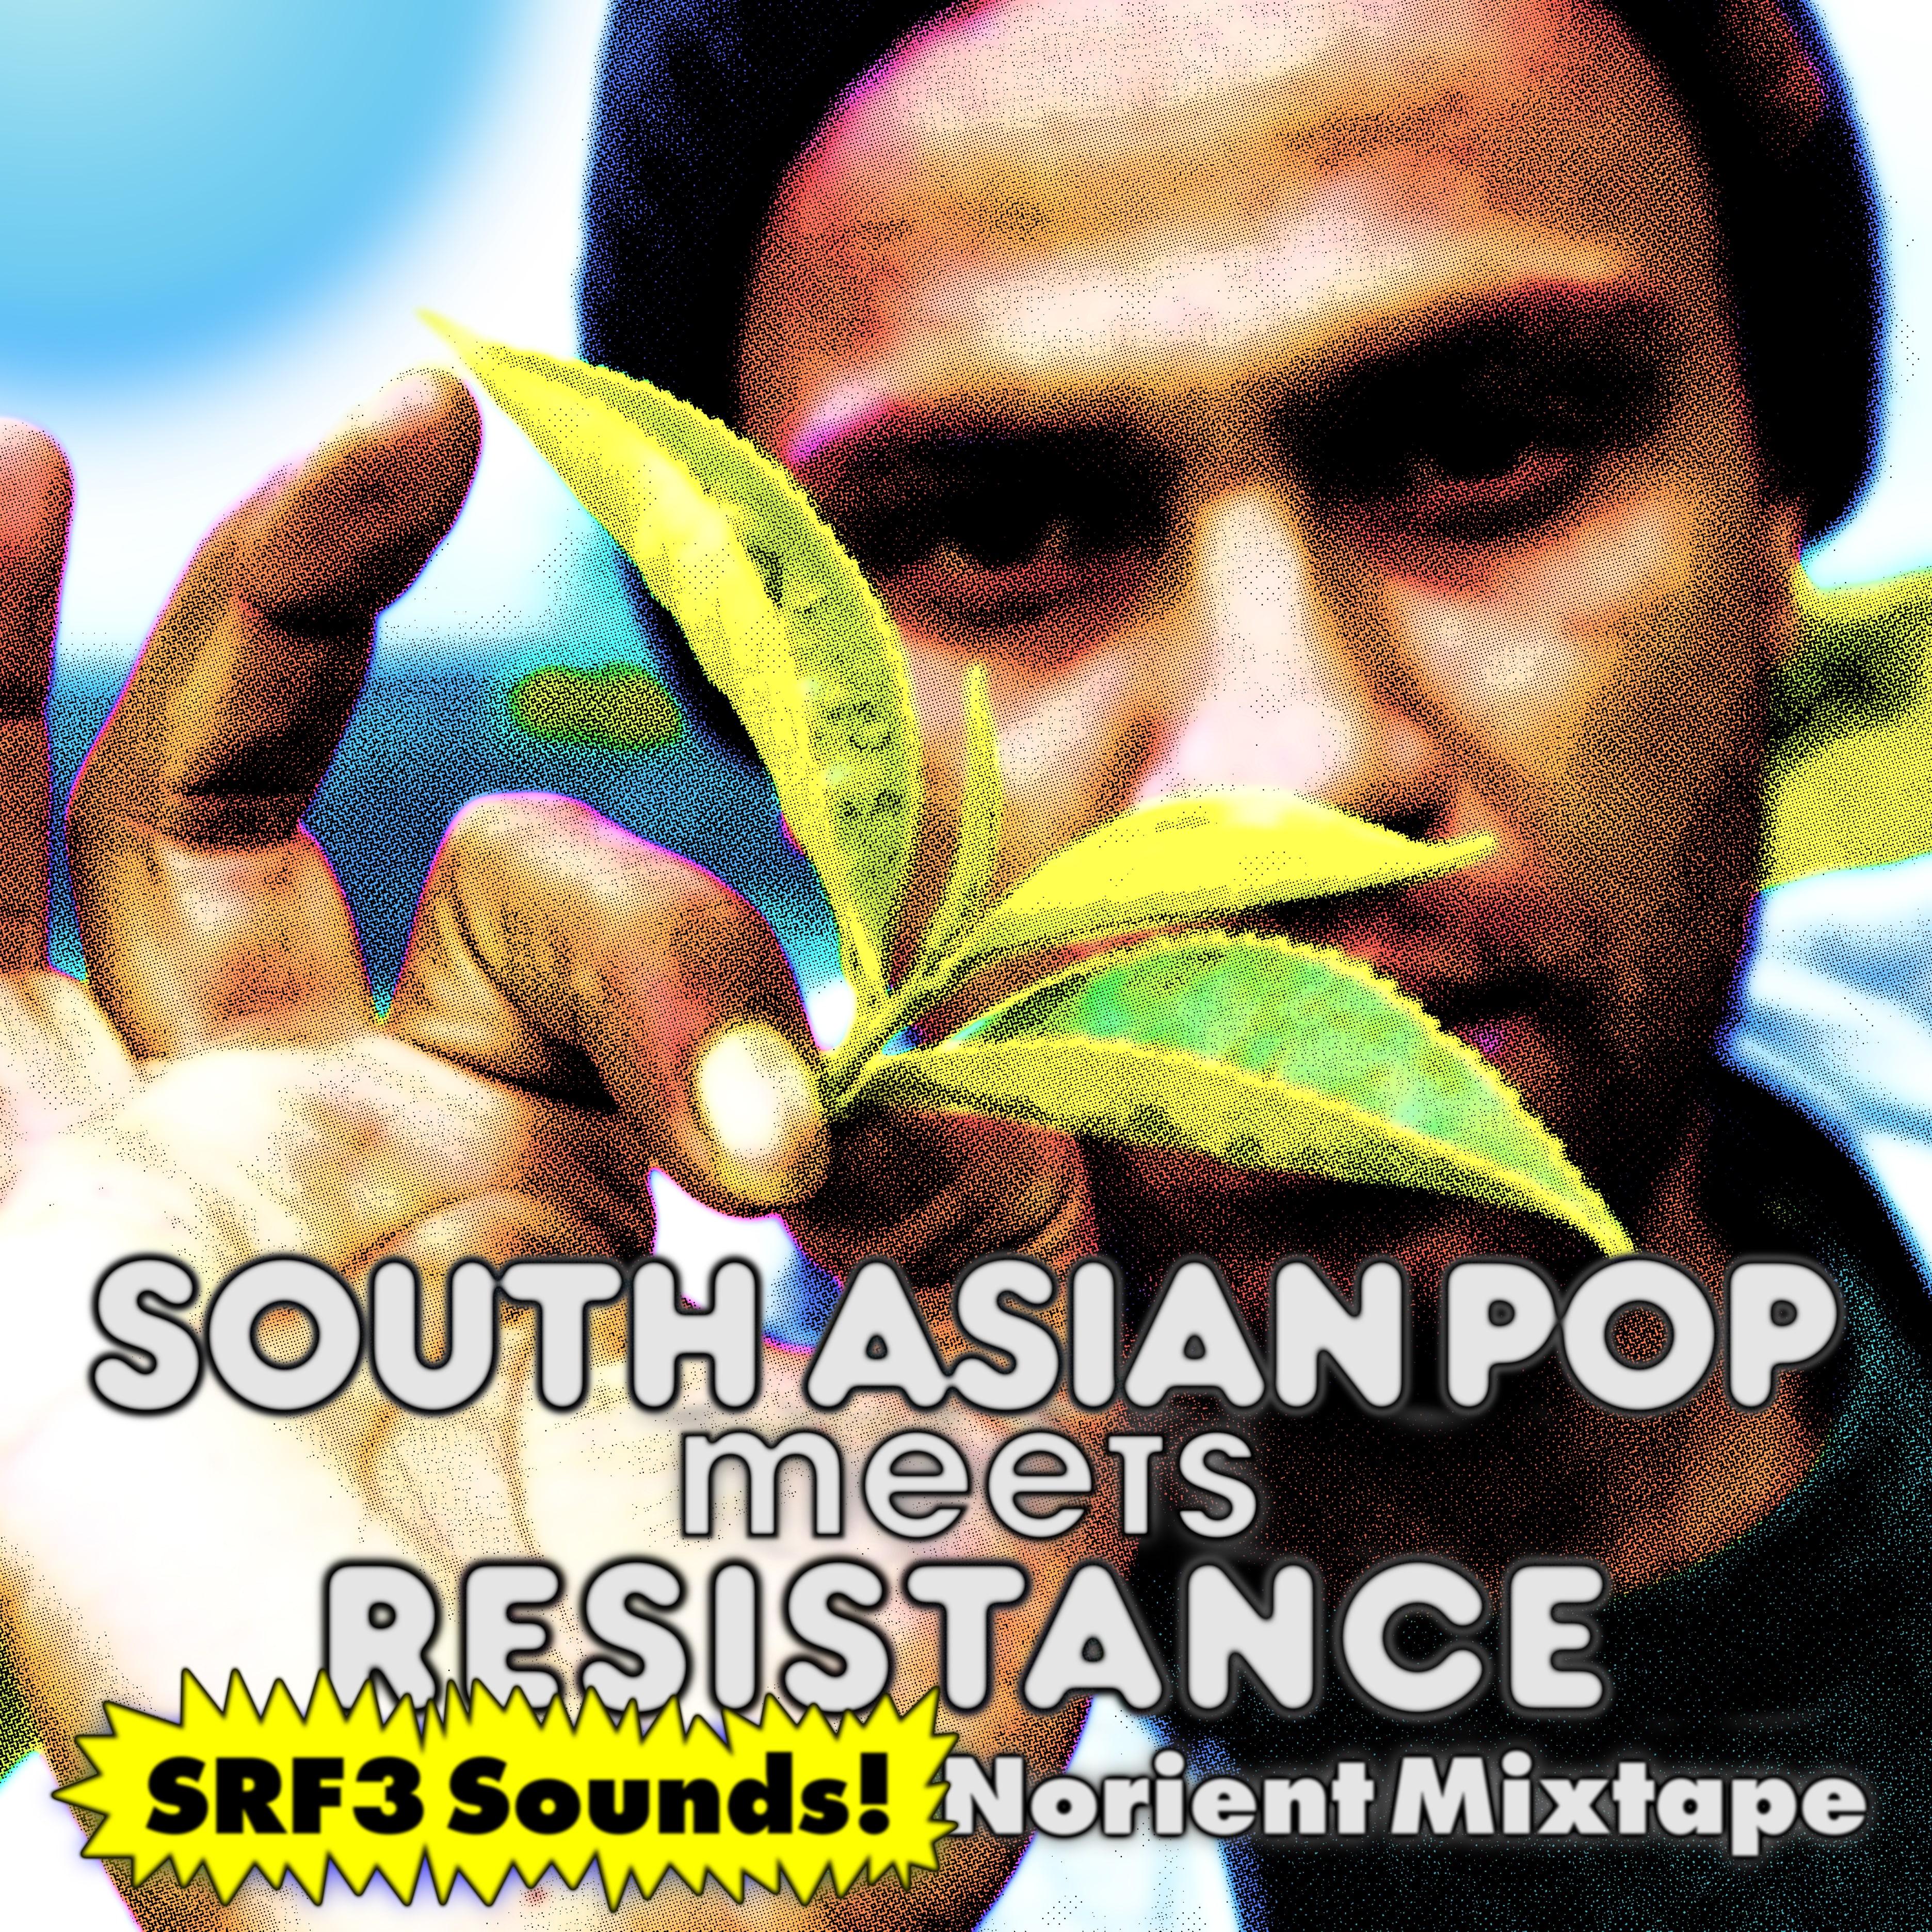 Norient Mixtape #2 – South Asian Pop meets Resistance (photo: Thomas Burkhalter/Jusomor).